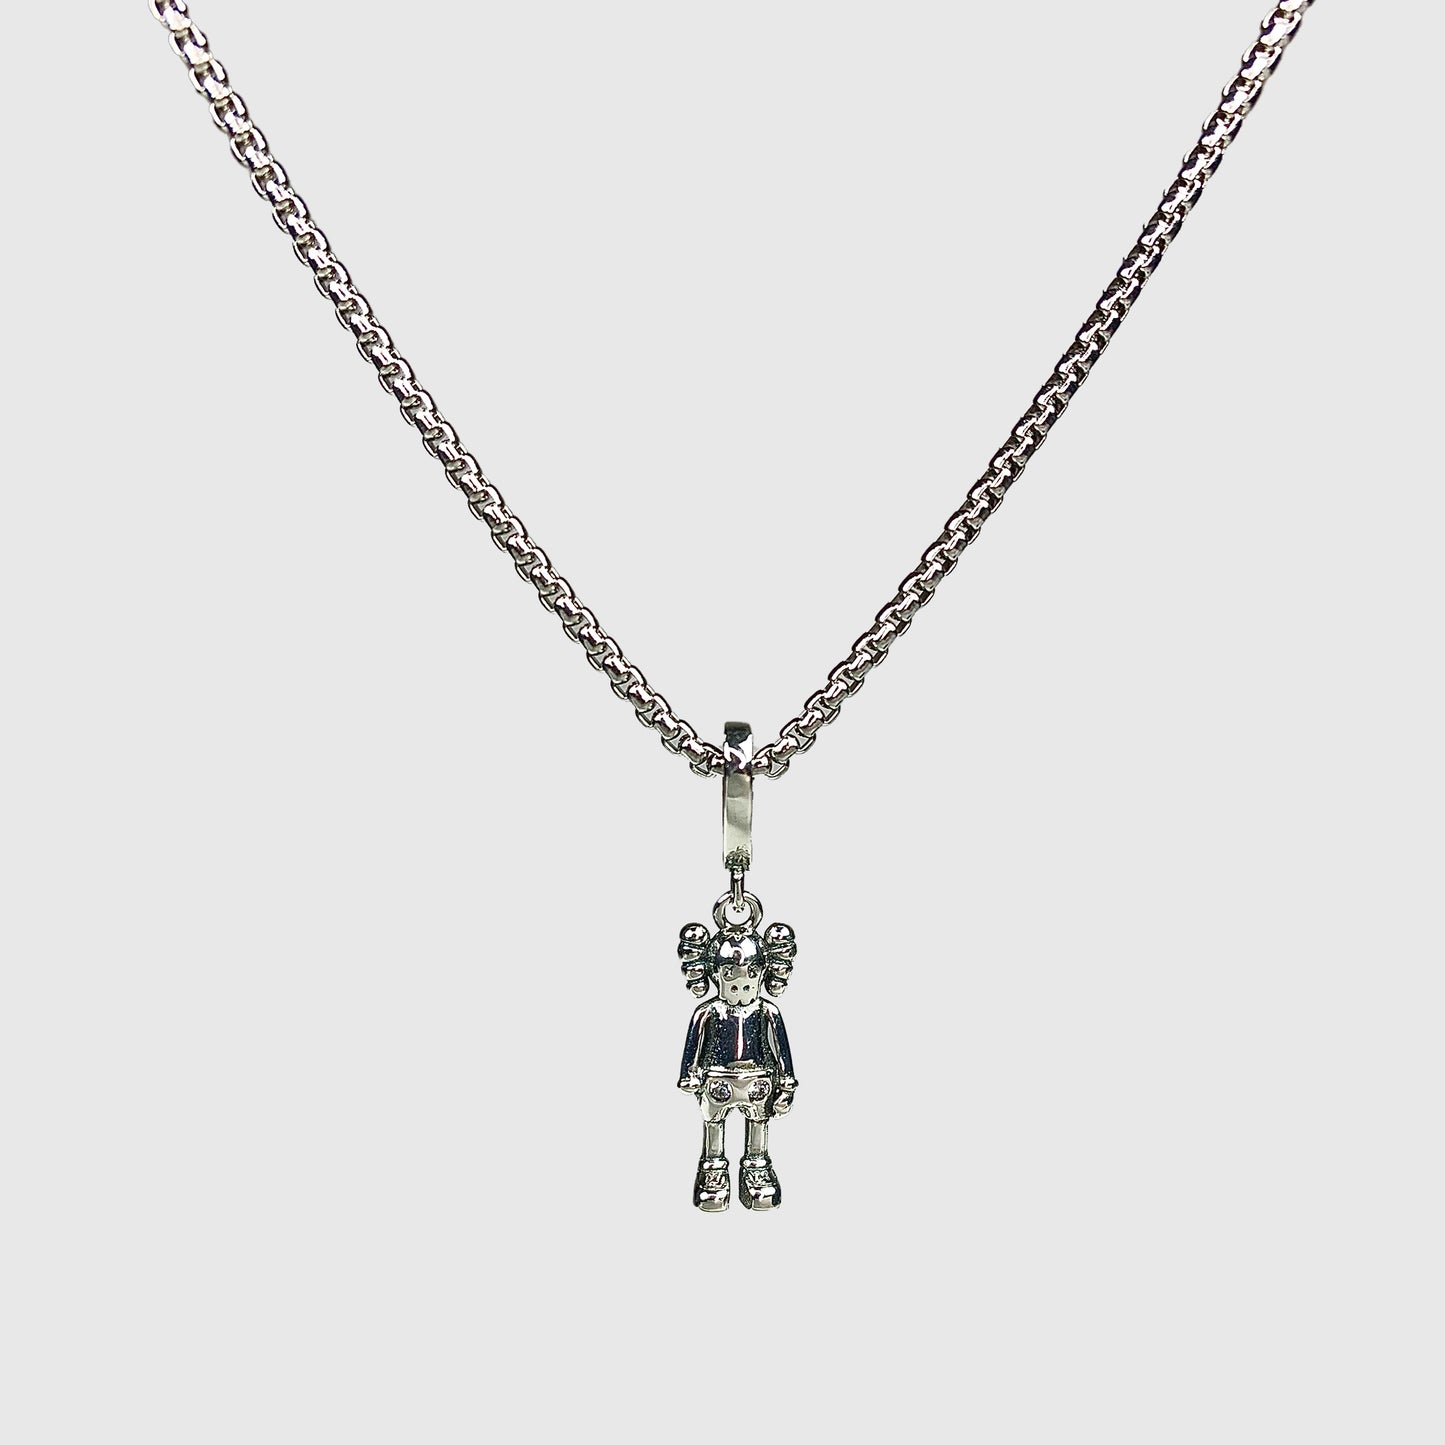 Kaws Inspired Companion Figure Pendant Necklace